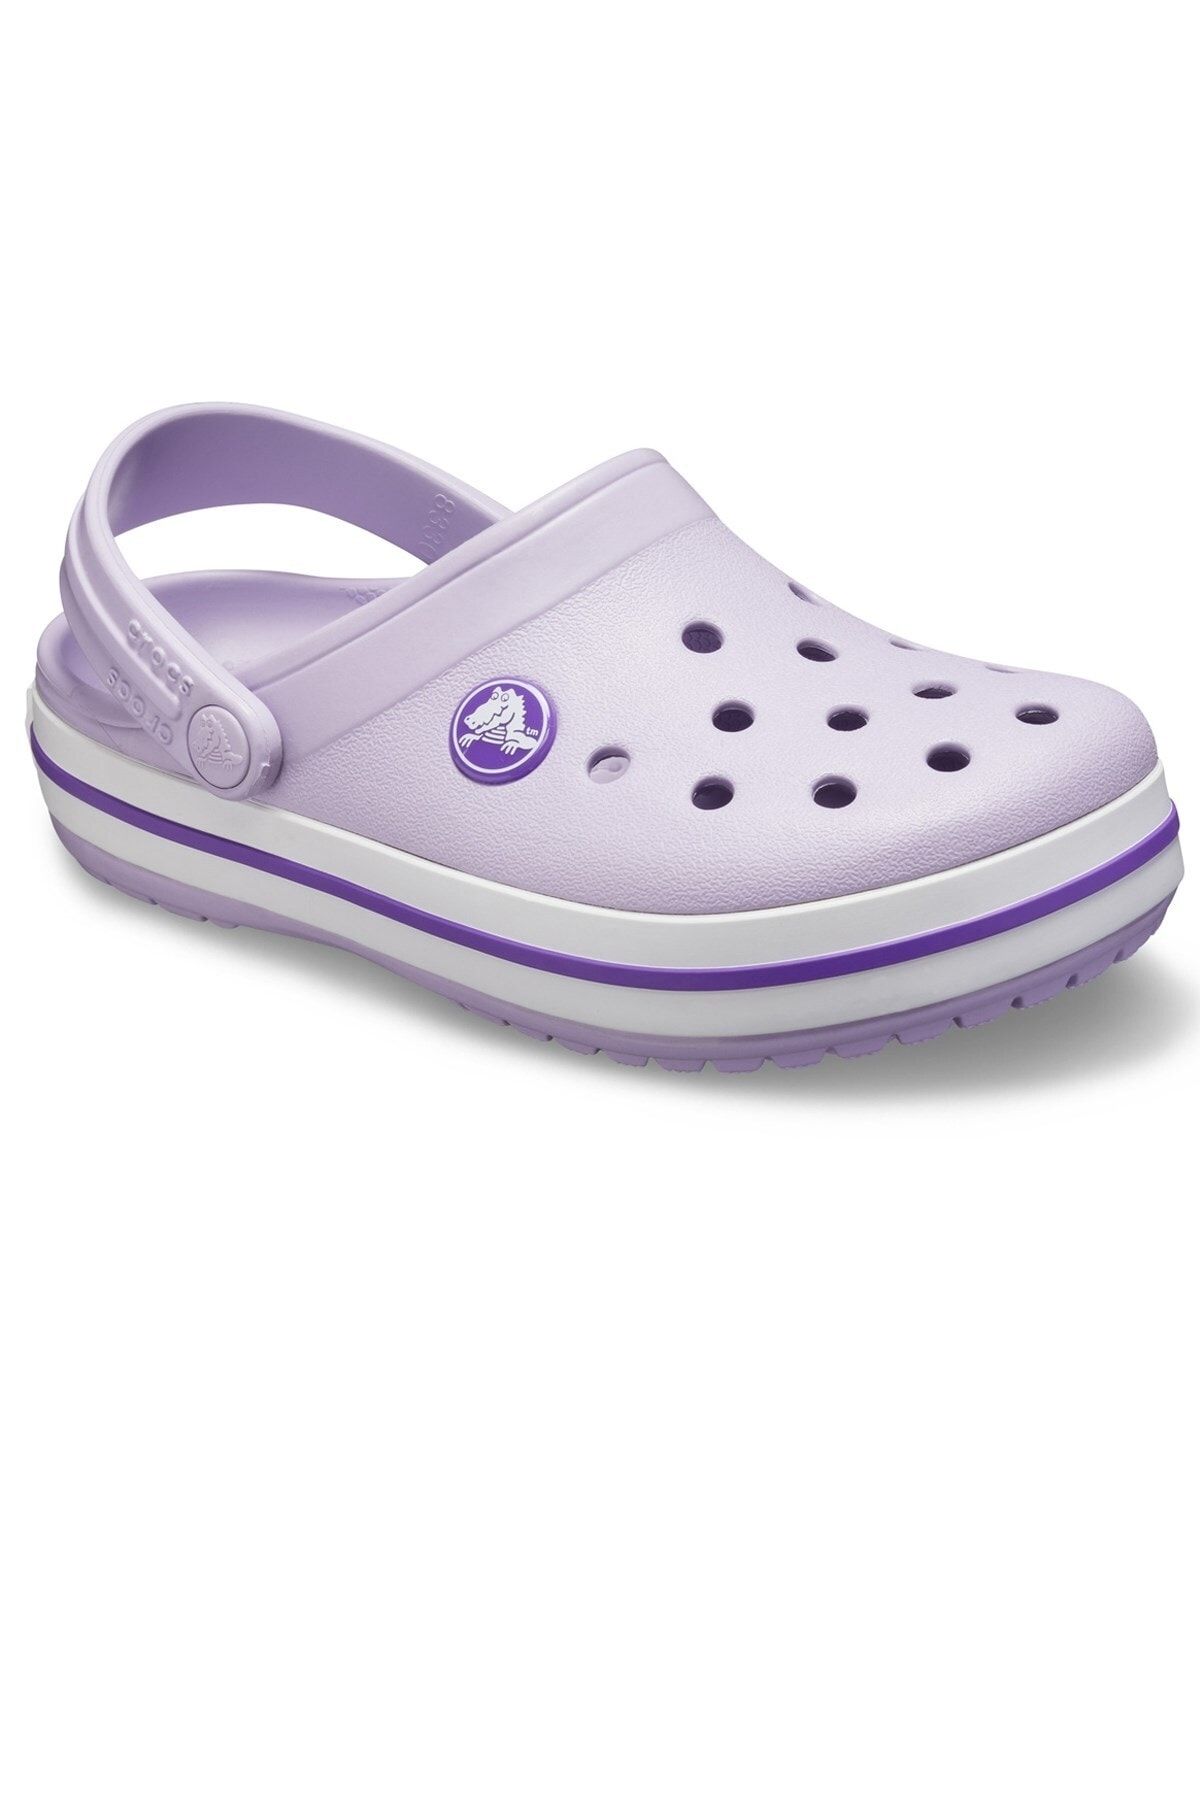 Crocs Clog K 207006-5p8 Sandalet